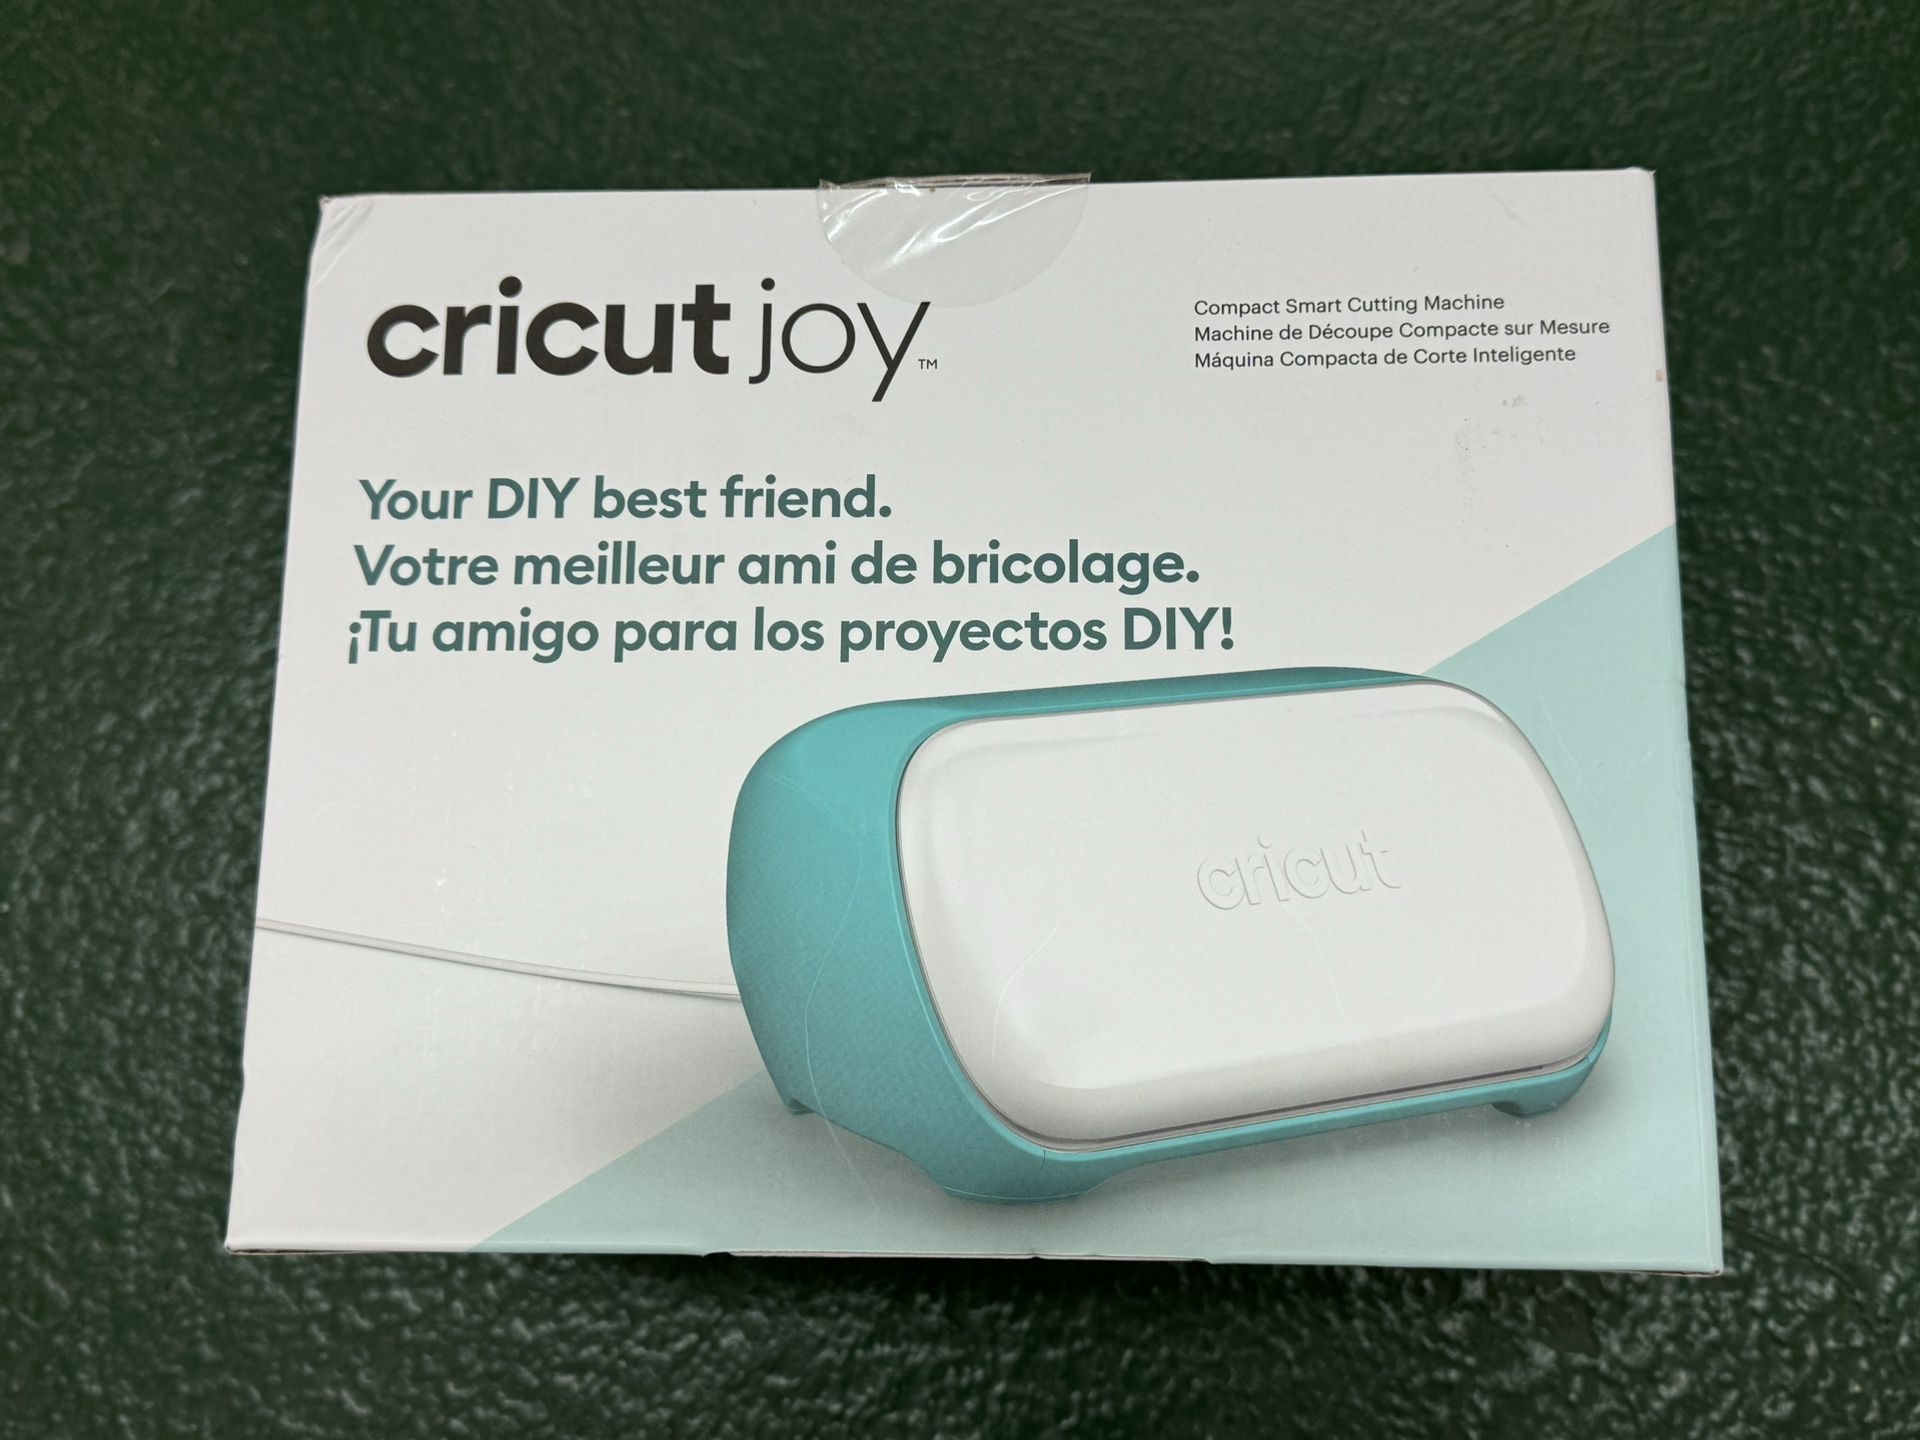 NEW! Cricut Joy Compact Smart Cutting Machine